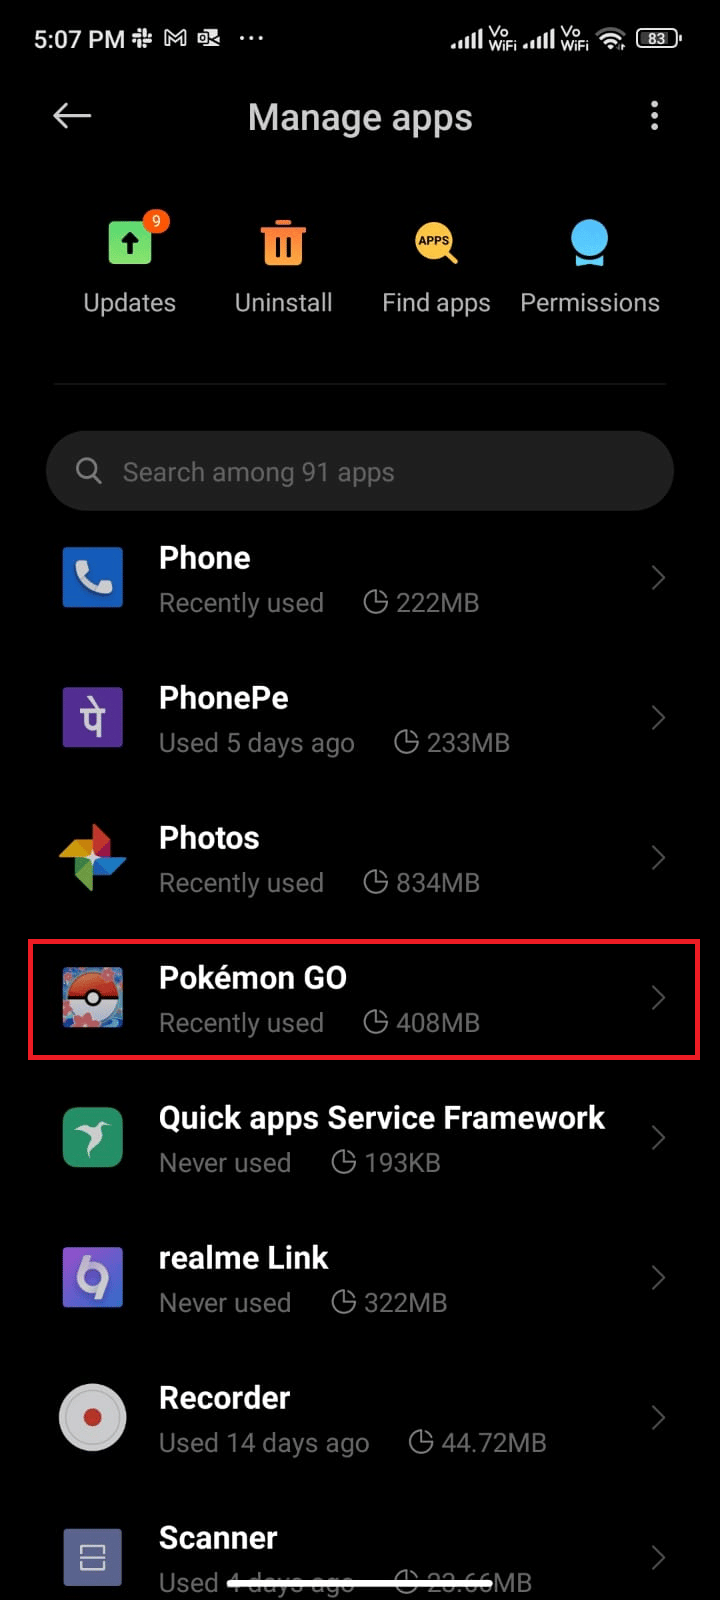 Then, tap on Manage apps followed by Pokémon Go . fix Pokémon Go adventure sync not working